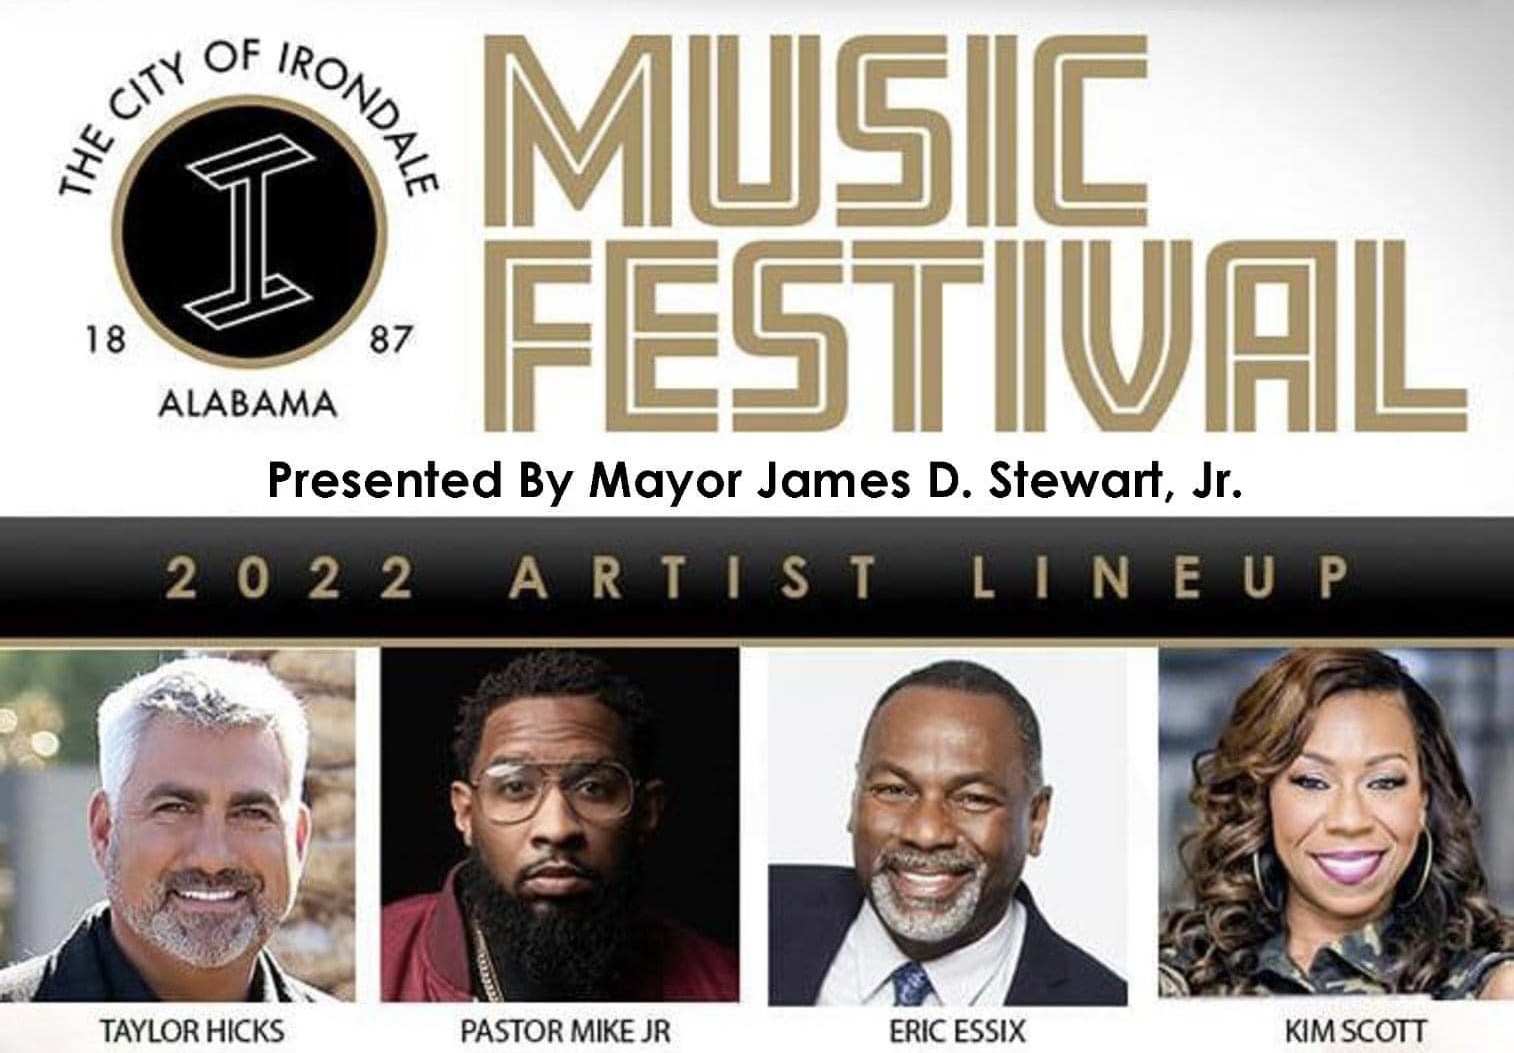 Mayor Stewart hosts music festival to celebrate Irondale’s 135th birthday